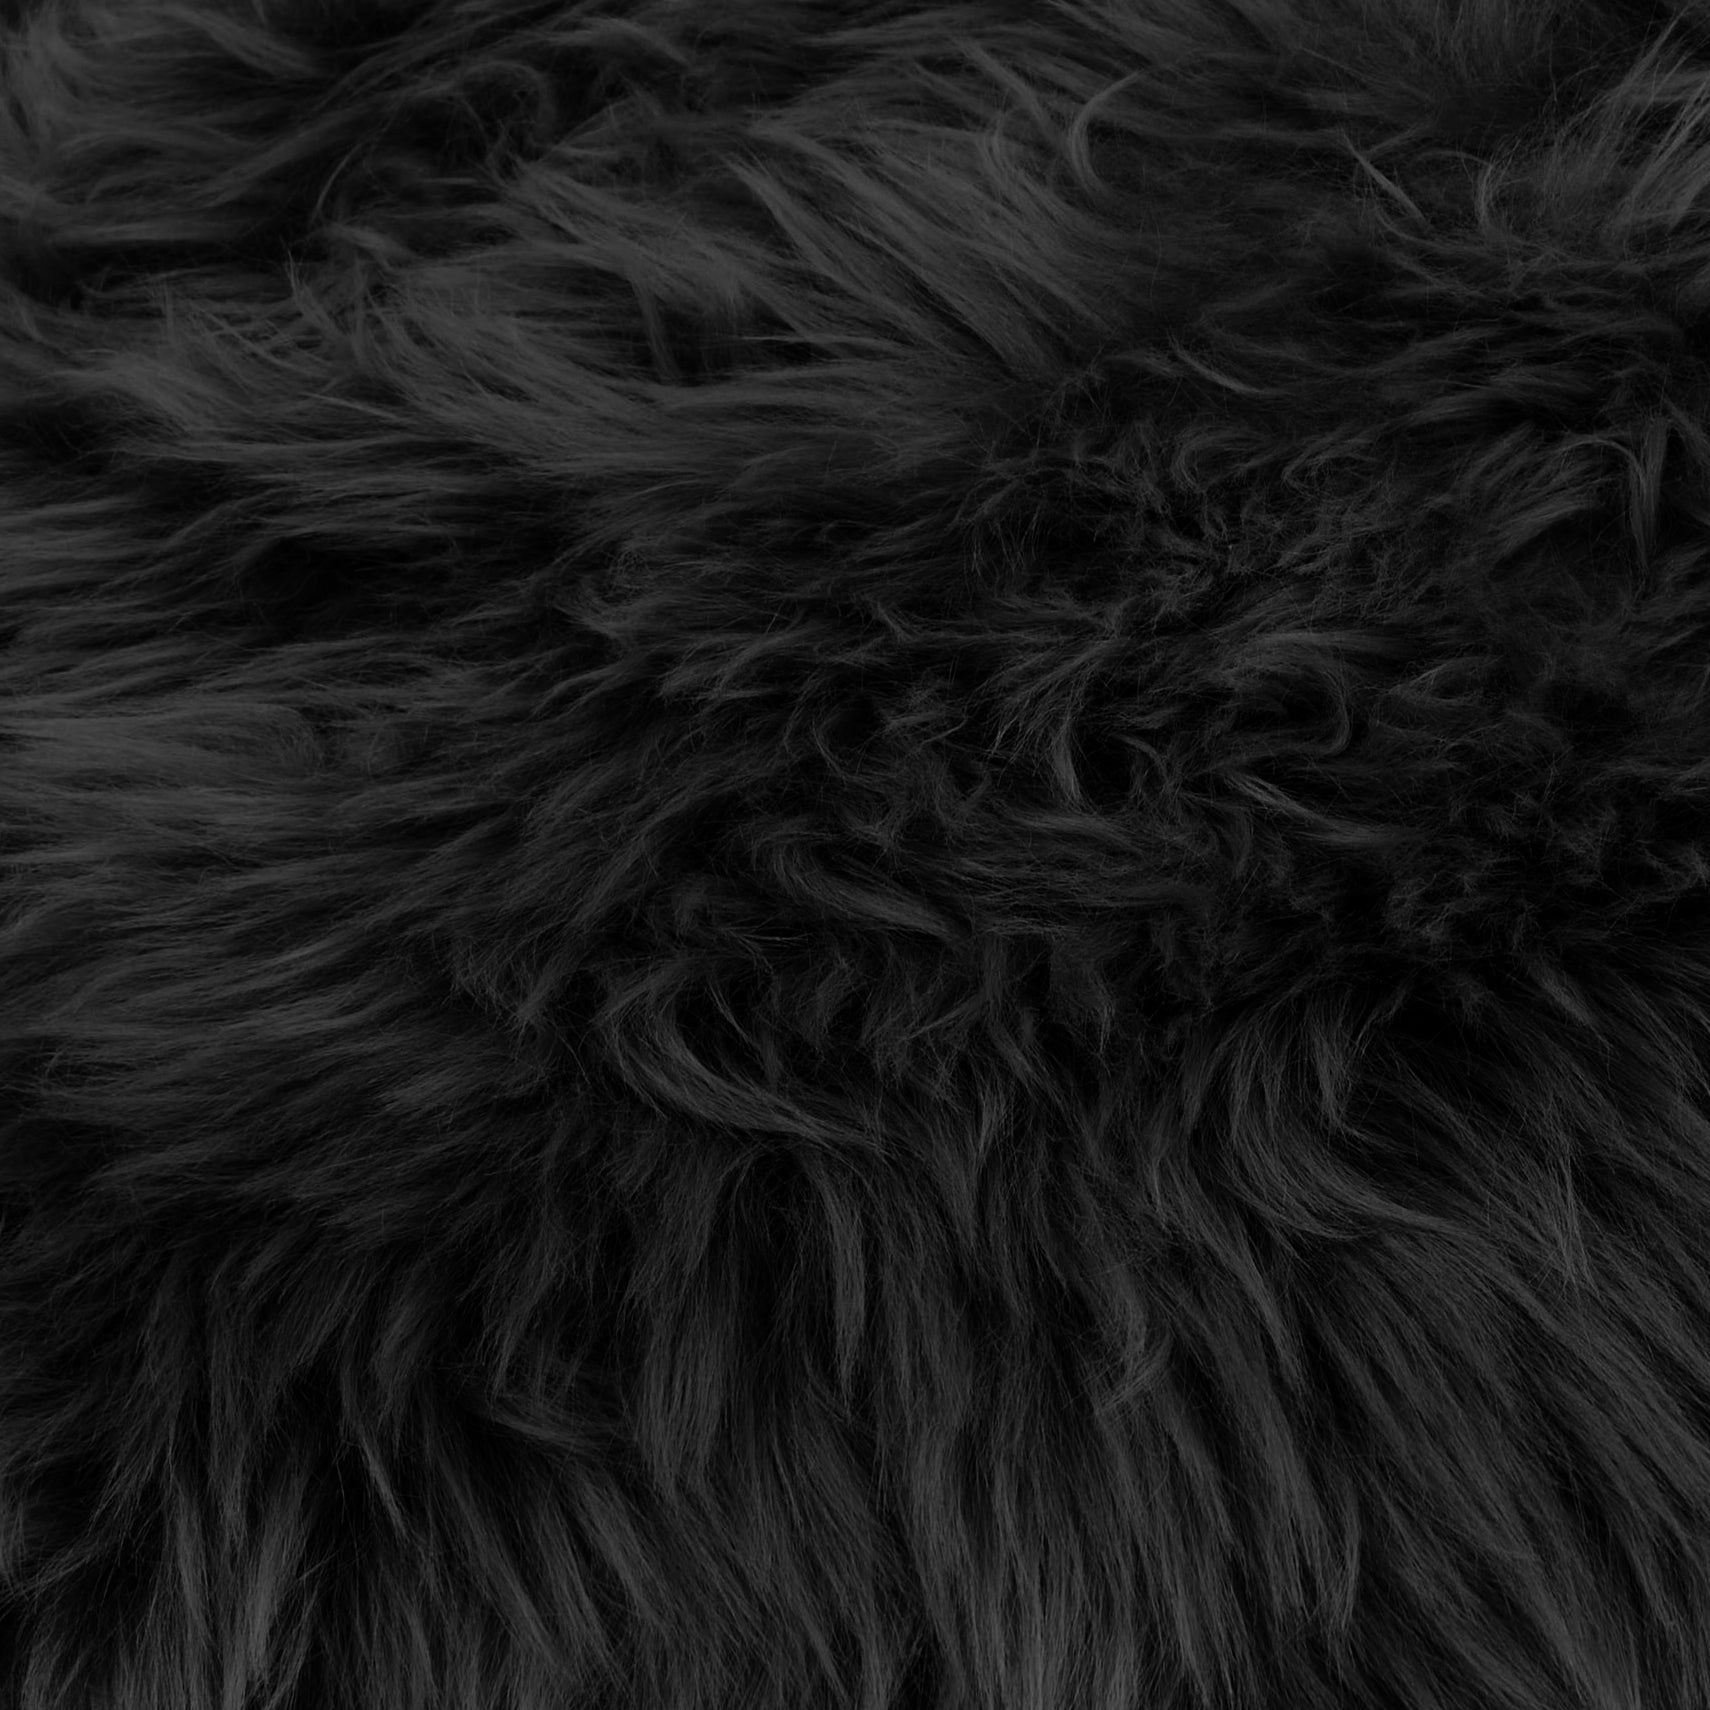 Black genuine sheepskin throw pillow